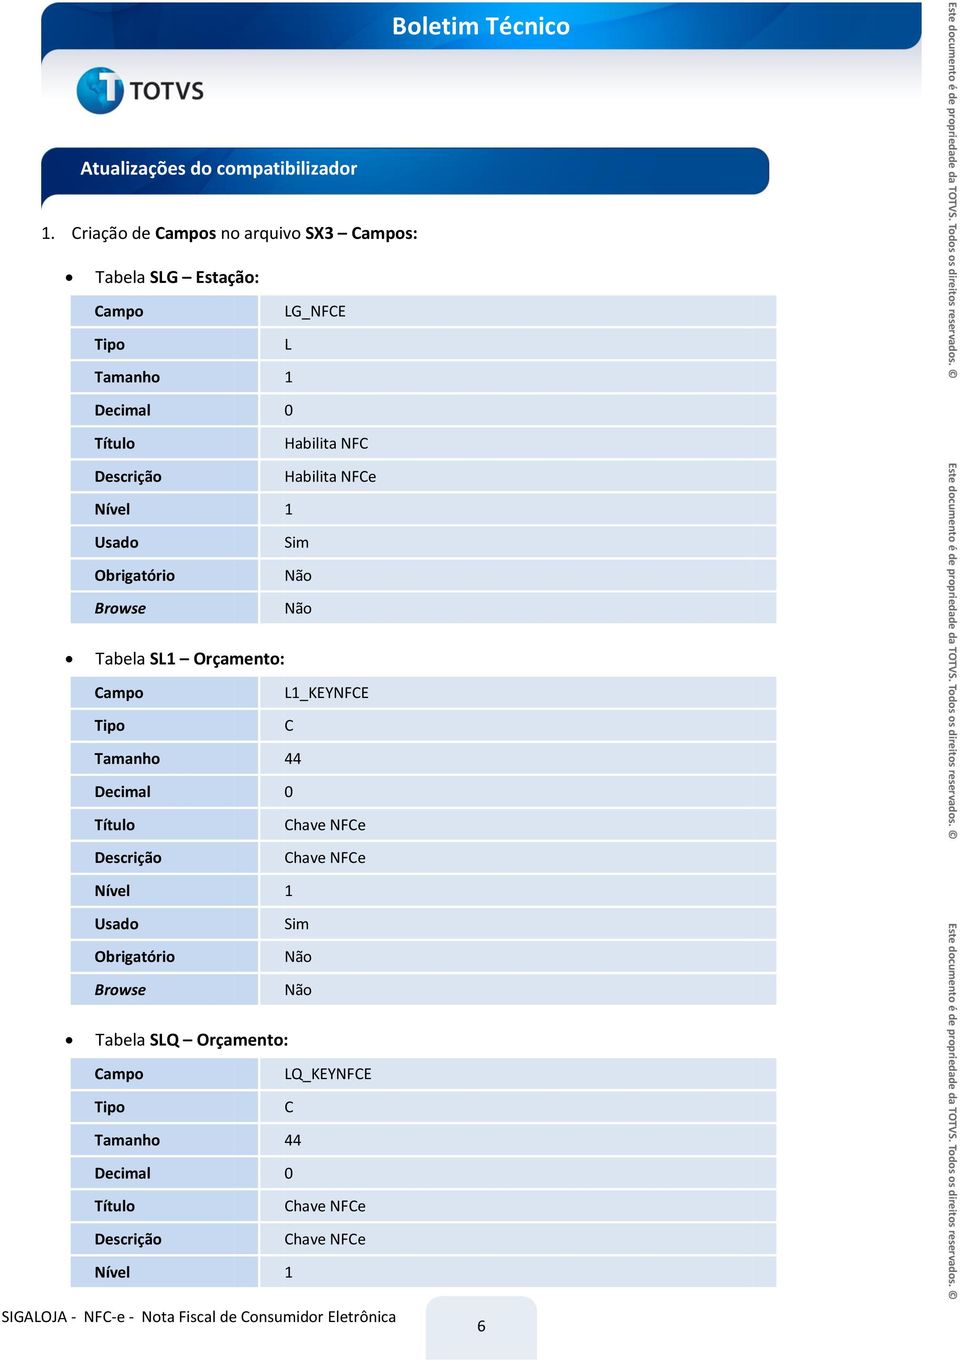 Habilita NF Habilita NFe Tabela SL1 Orçamento: ampo L1_KEYNFE Tamanho 44 have NFe